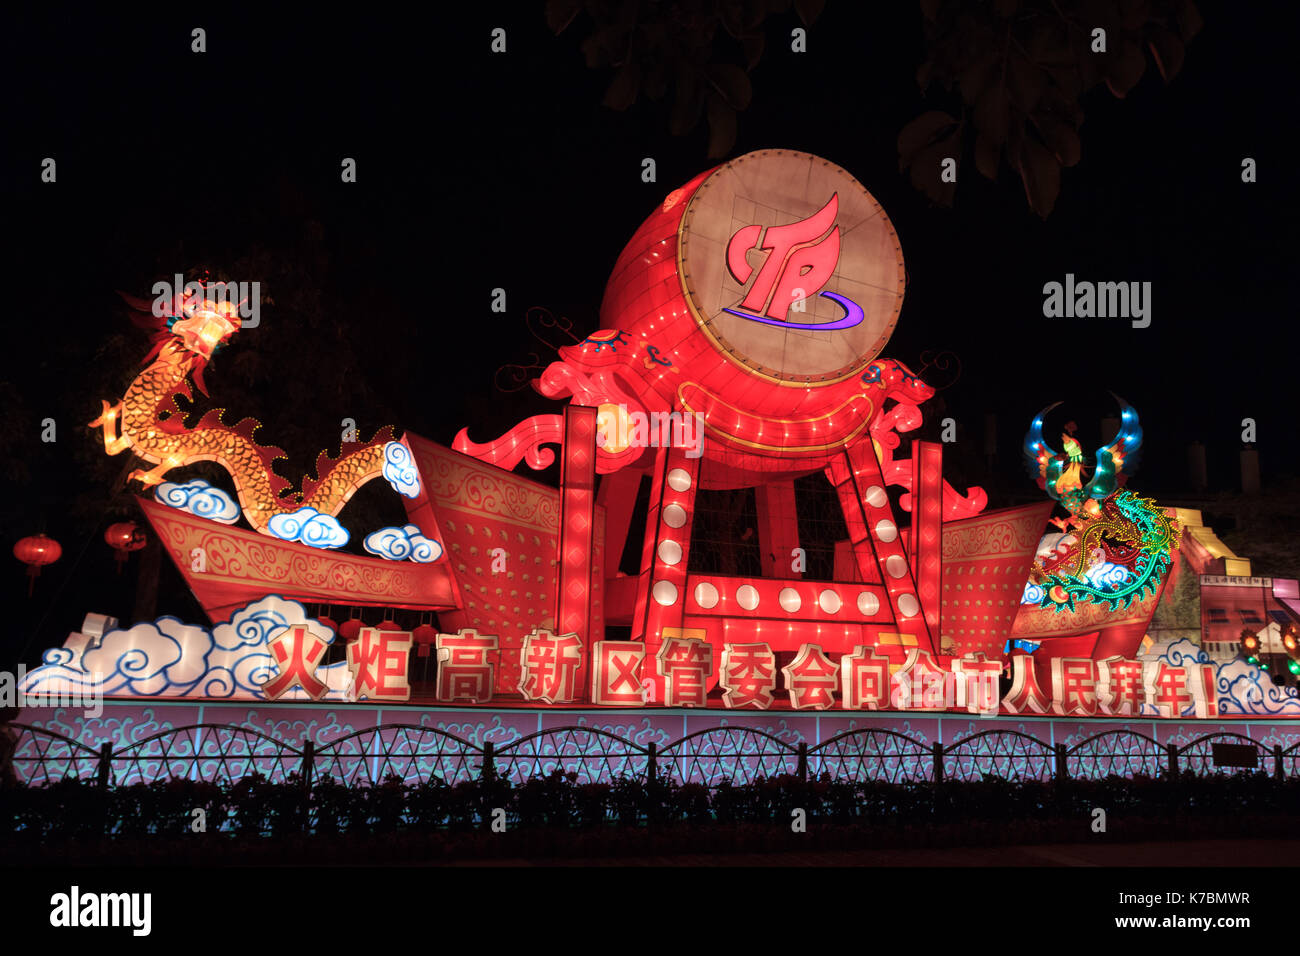 Xiamen, China - Feb 4, 2014: Exhibit Of Lanterns Festival in Xiamen Garden Expo, China Stock Photo